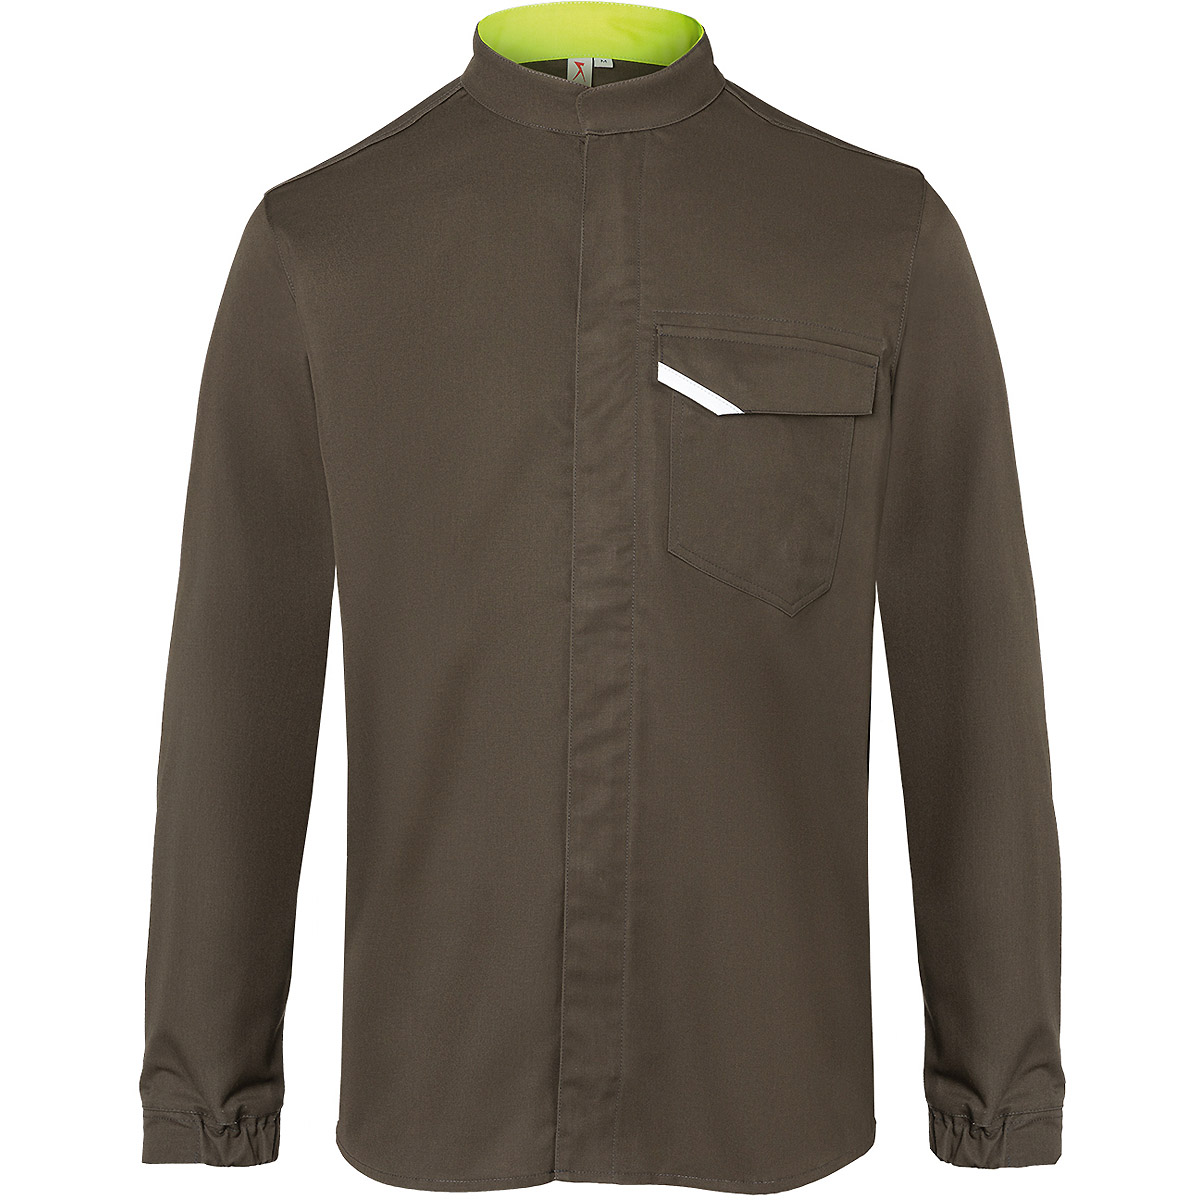 | | & KÜBLER Arbeitskleidung | 3 Pullover | tuulzone Hemd Shirts PSA T-Shirts | BIOGUARD Arbeitsschutz